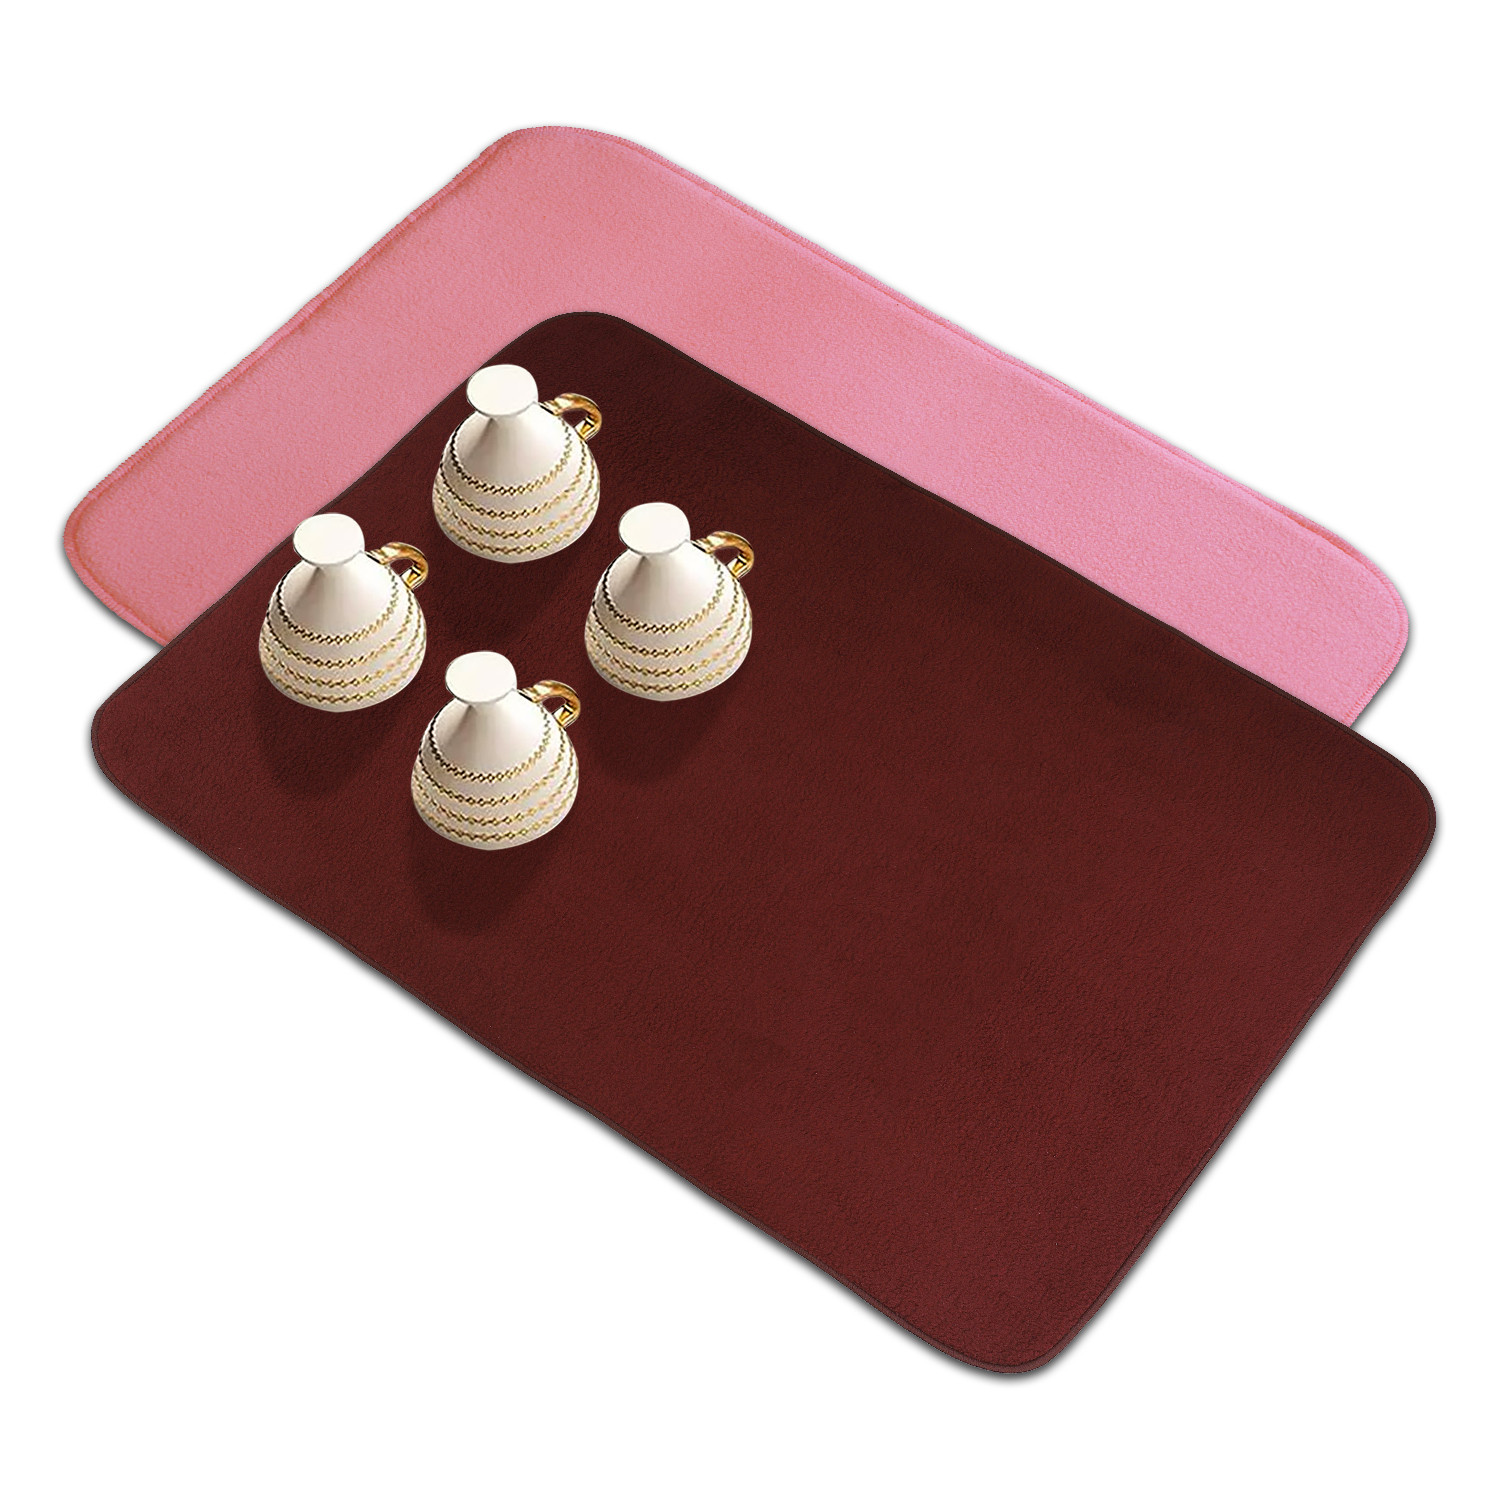 Kuber Industries Dish Dry Mat | Microfiber Drying Mat | Reversible Kitchen Drying Mat | Absorbent Mat | Kitchen Dish Dry Mat | 50x70 | Pack of 2 | Pink & Maroon